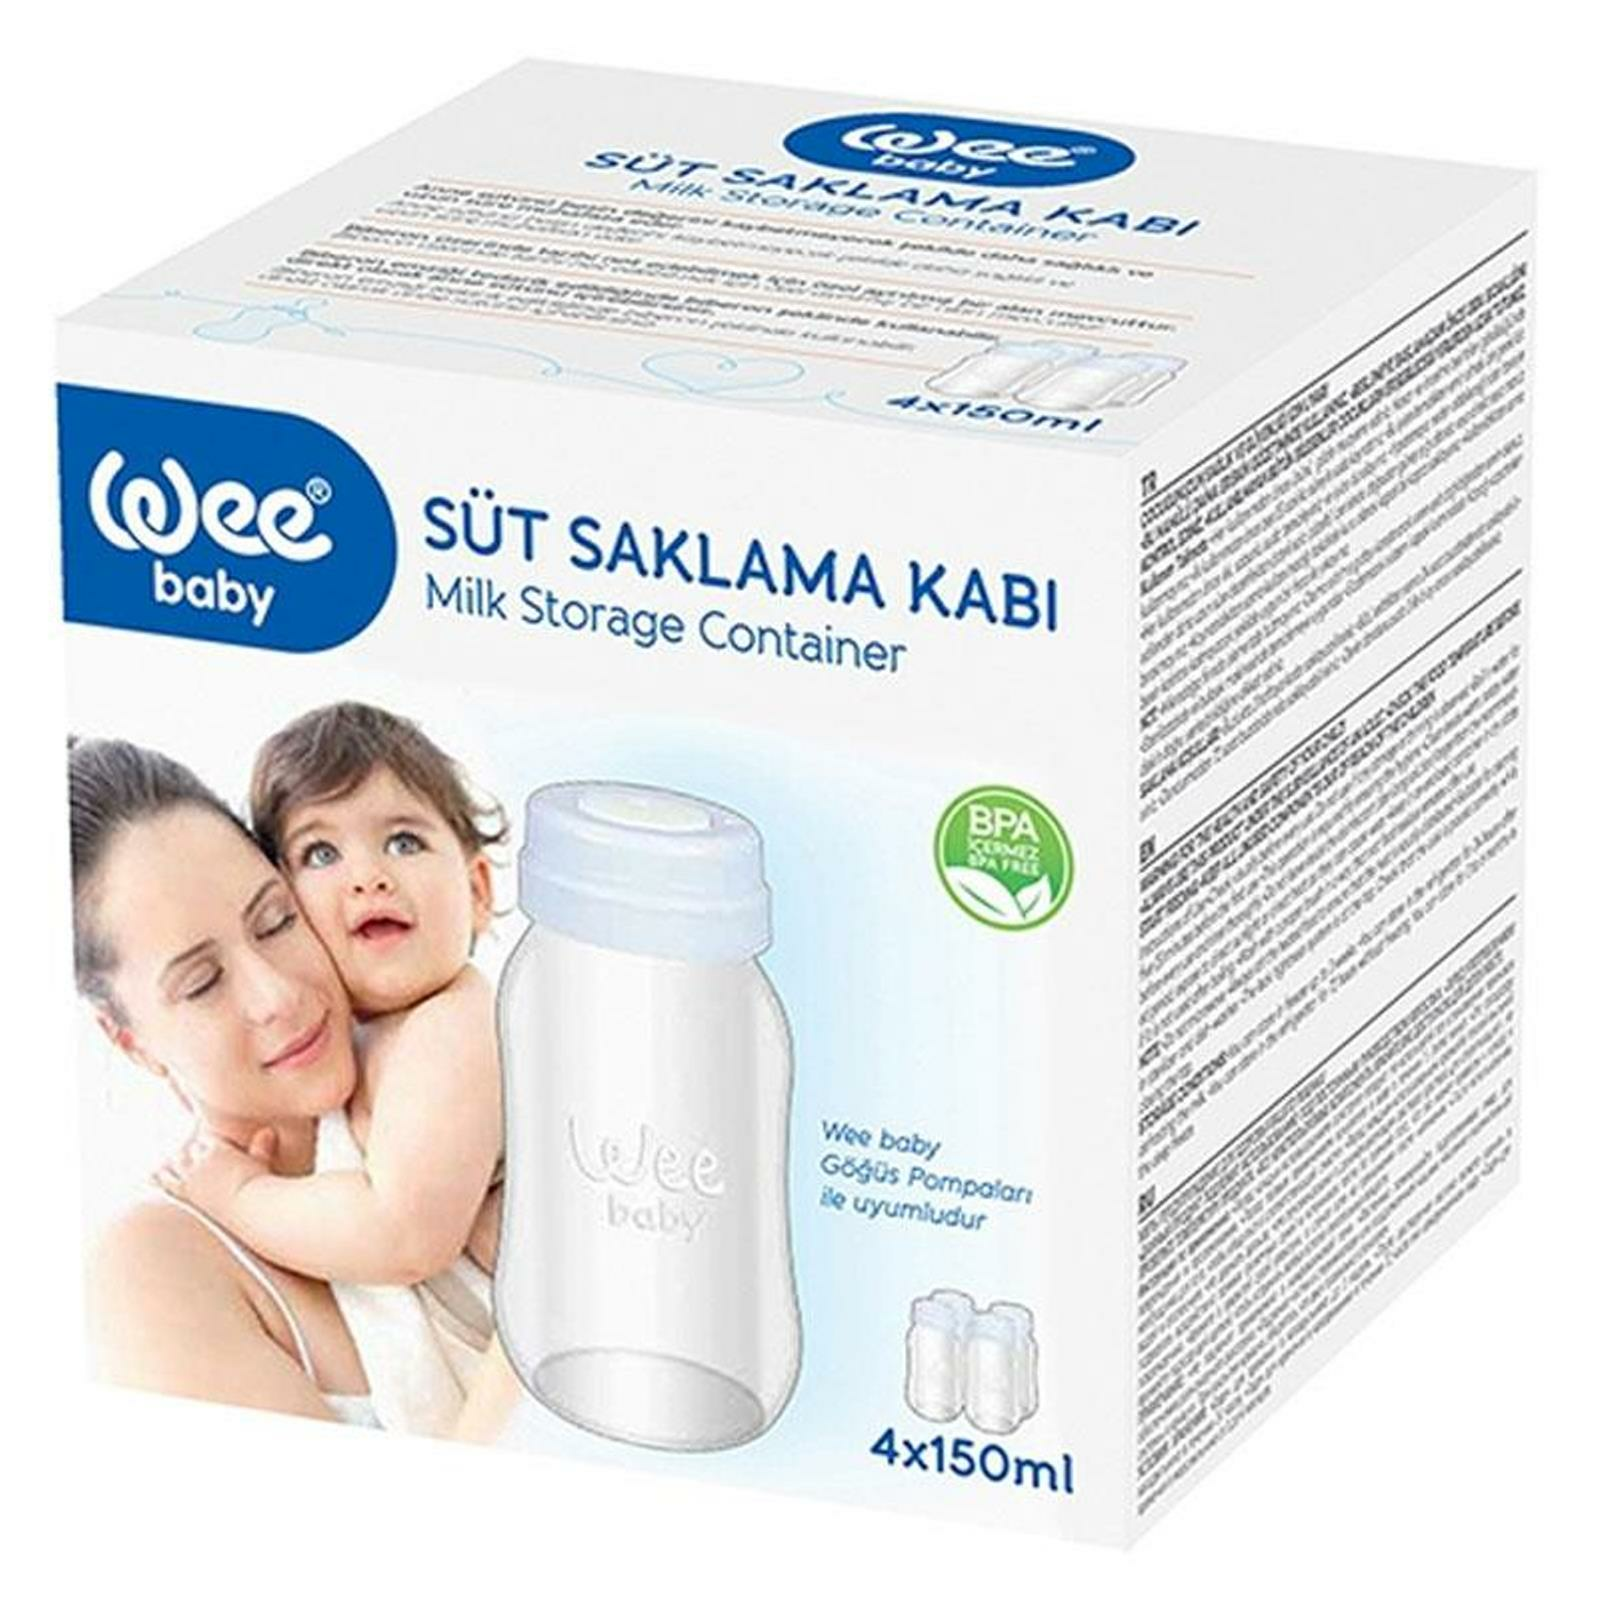 Wee Baby Süt Saklama Kabı 4 x 150 ml